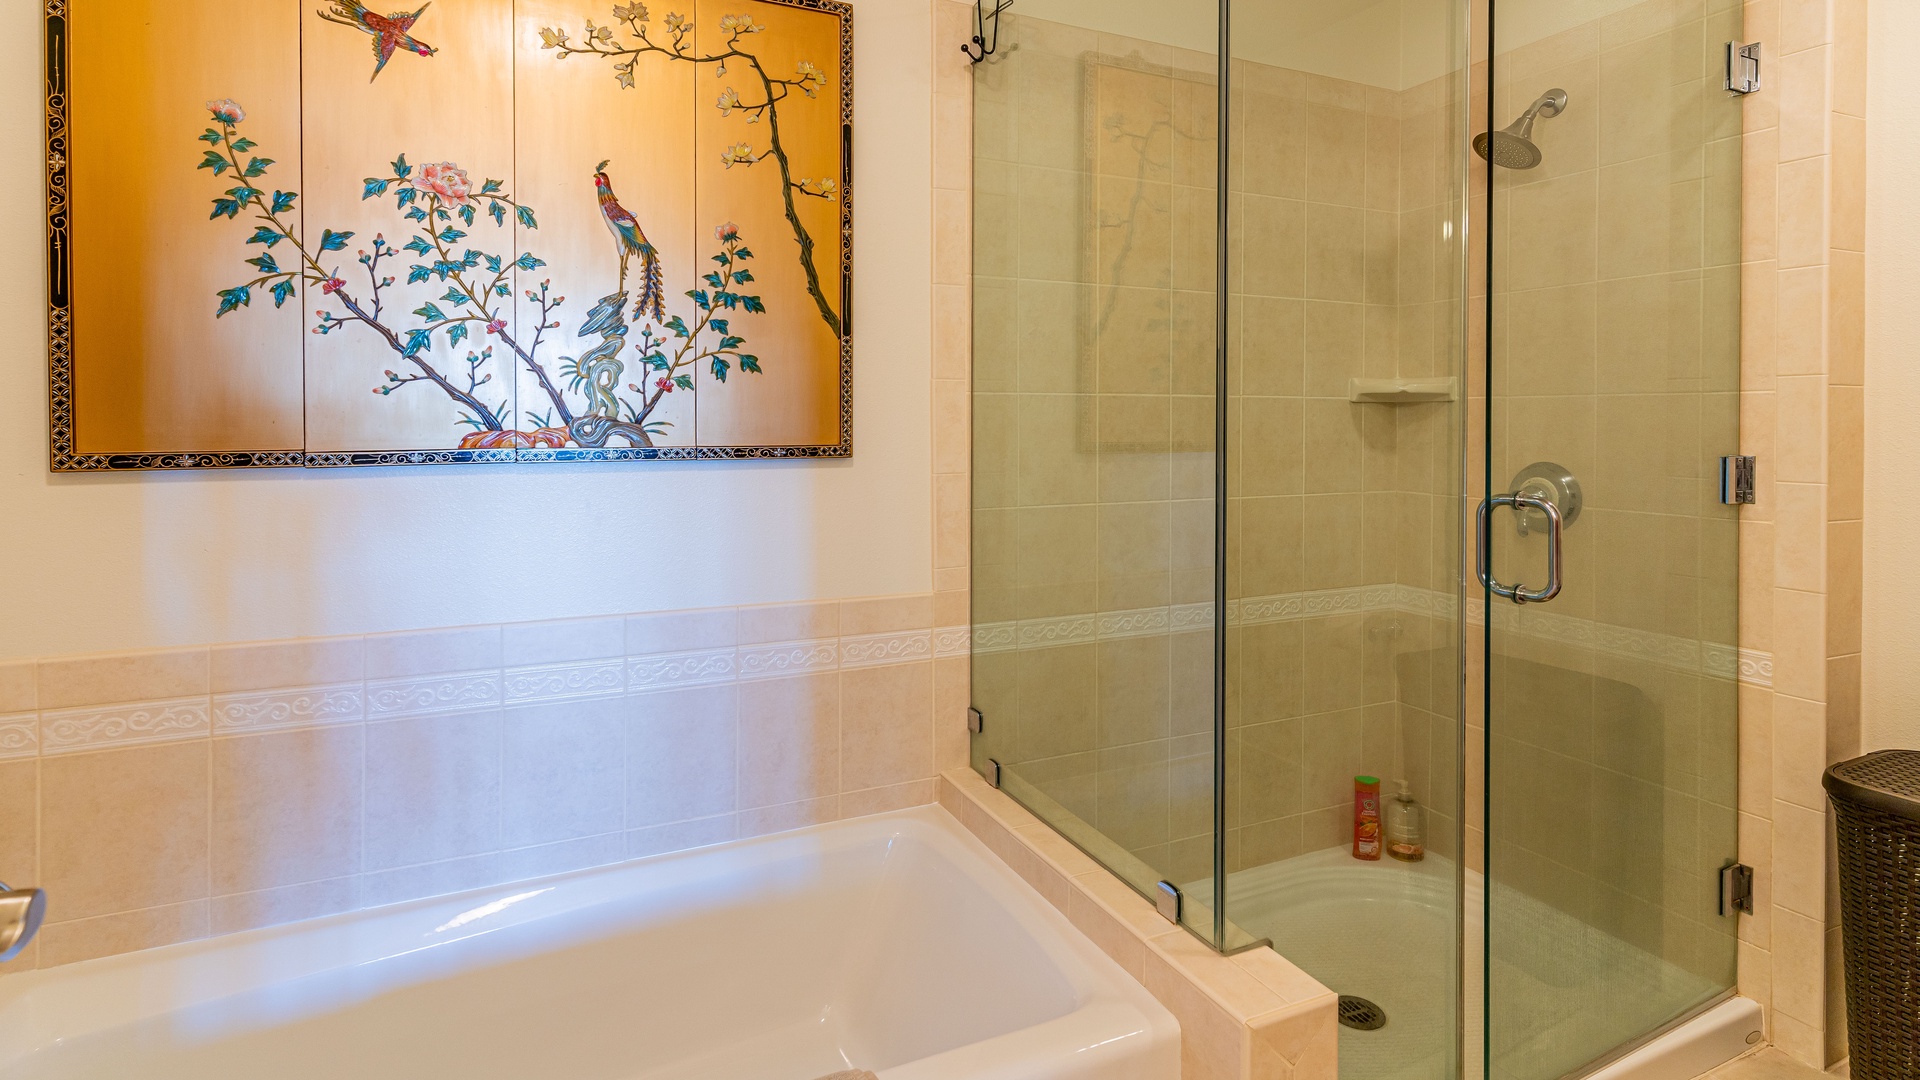 Kapolei Vacation Rentals, Kai Lani 16C - The primary guest bathroom bathtub and shower.